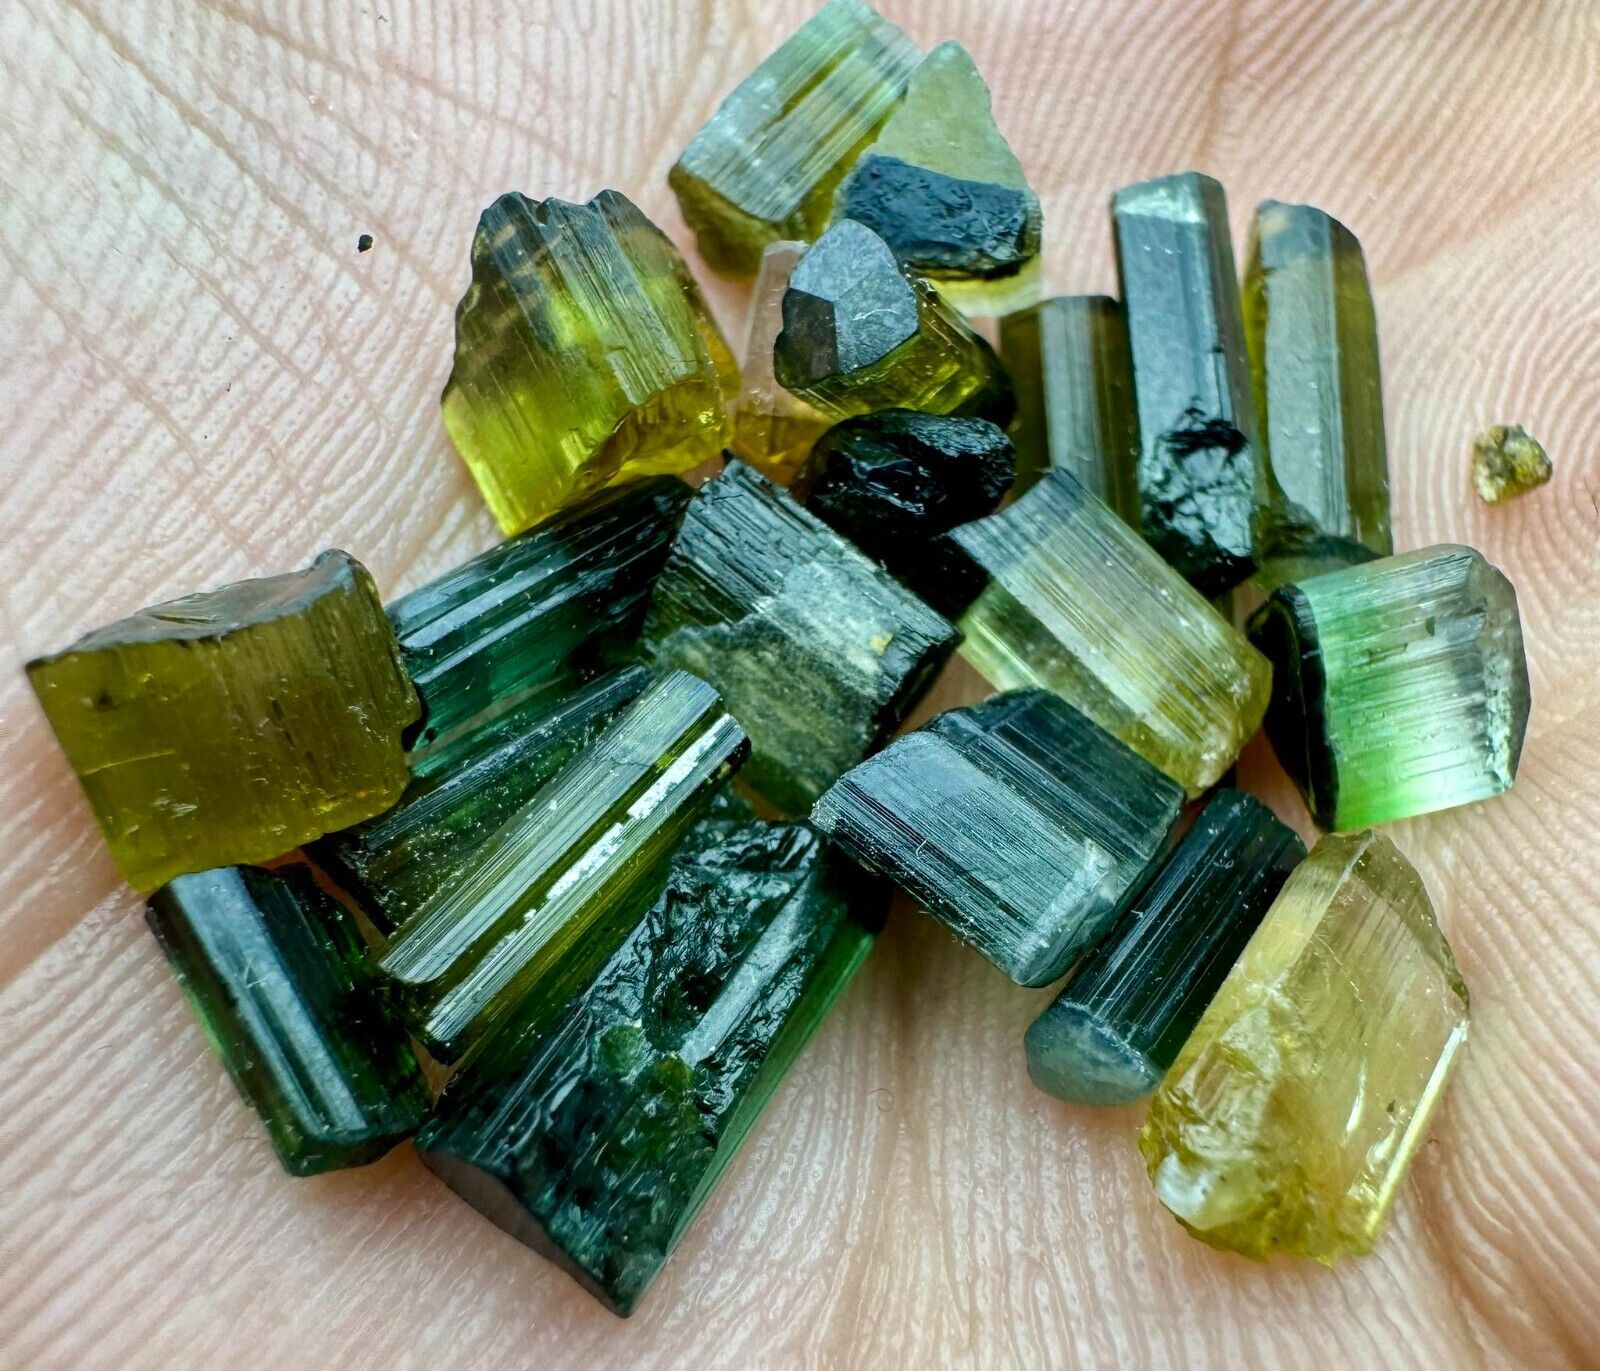 39 Carat Extraordinary Very Beautiful Tourmaline Crystals From Kunar @AFG